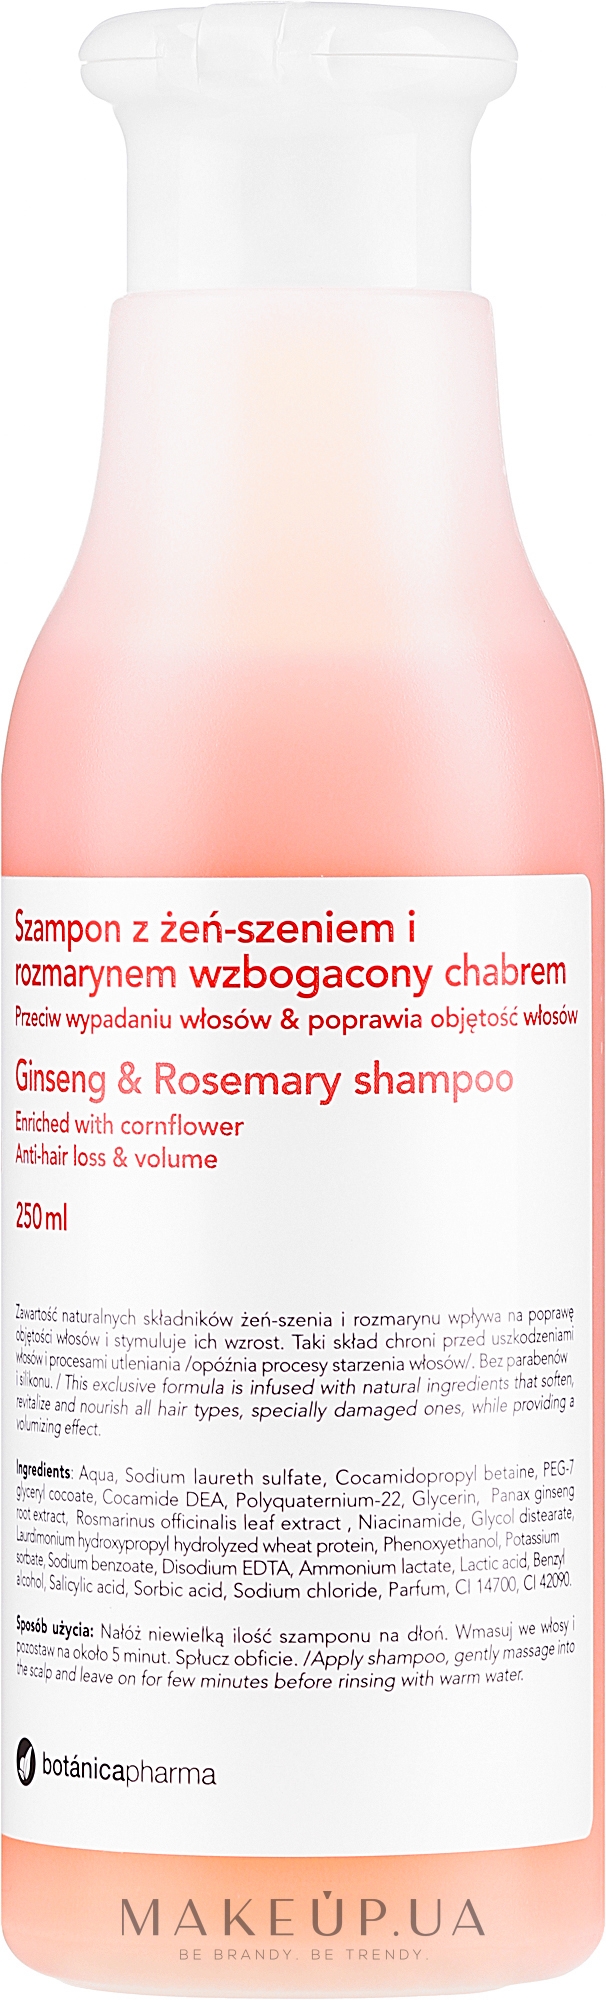 Шампунь с женьшенем - Botanicapharma Ginseng & Rosemary Shampoo — фото 250ml